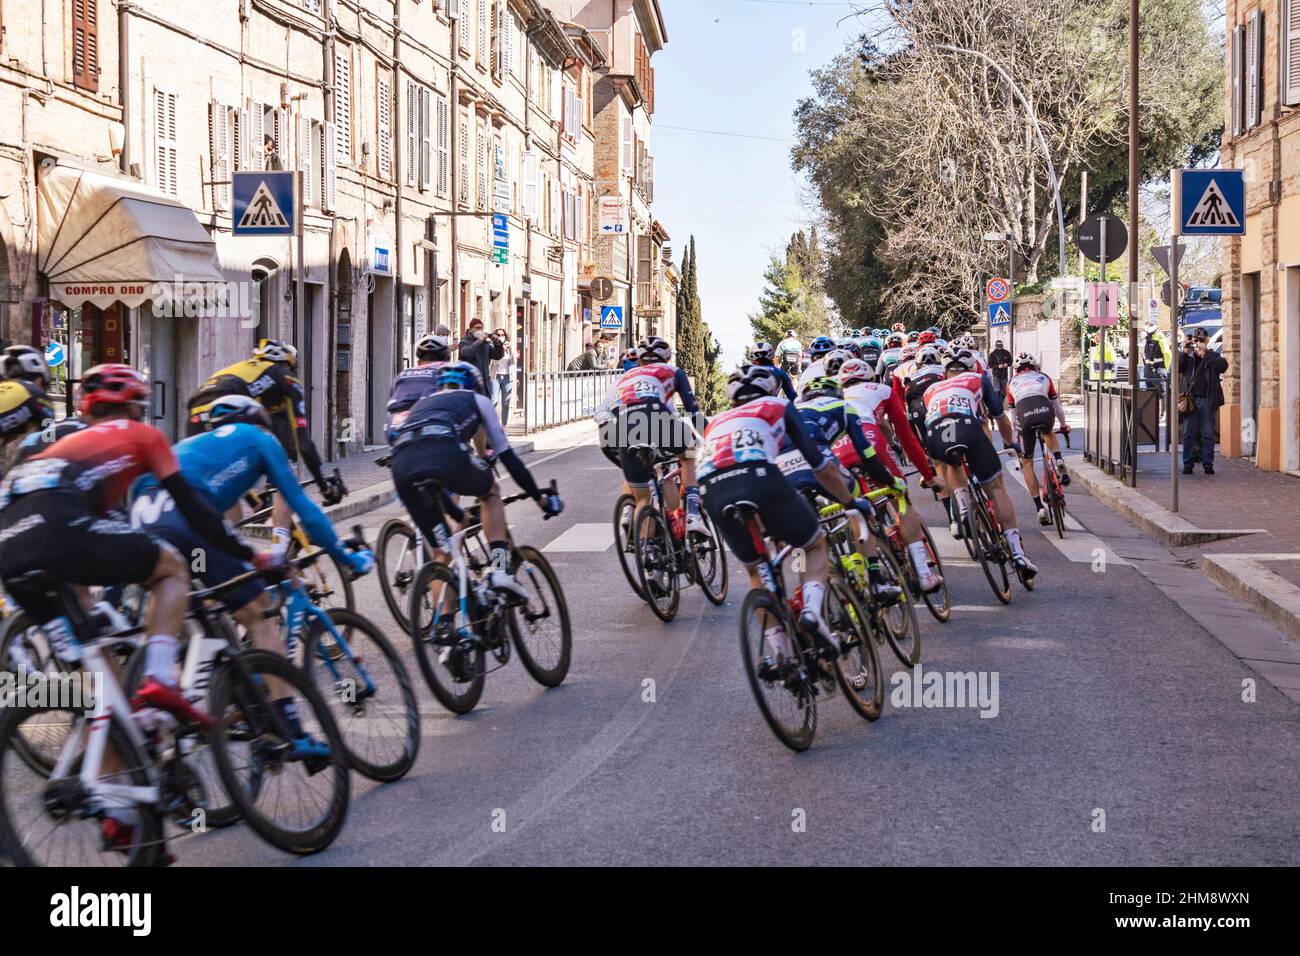 Corso Cairoli, passage de la course cycliste de Tirreno Adriatica, Macerata, Marche, Italie, Europe Banque D'Images